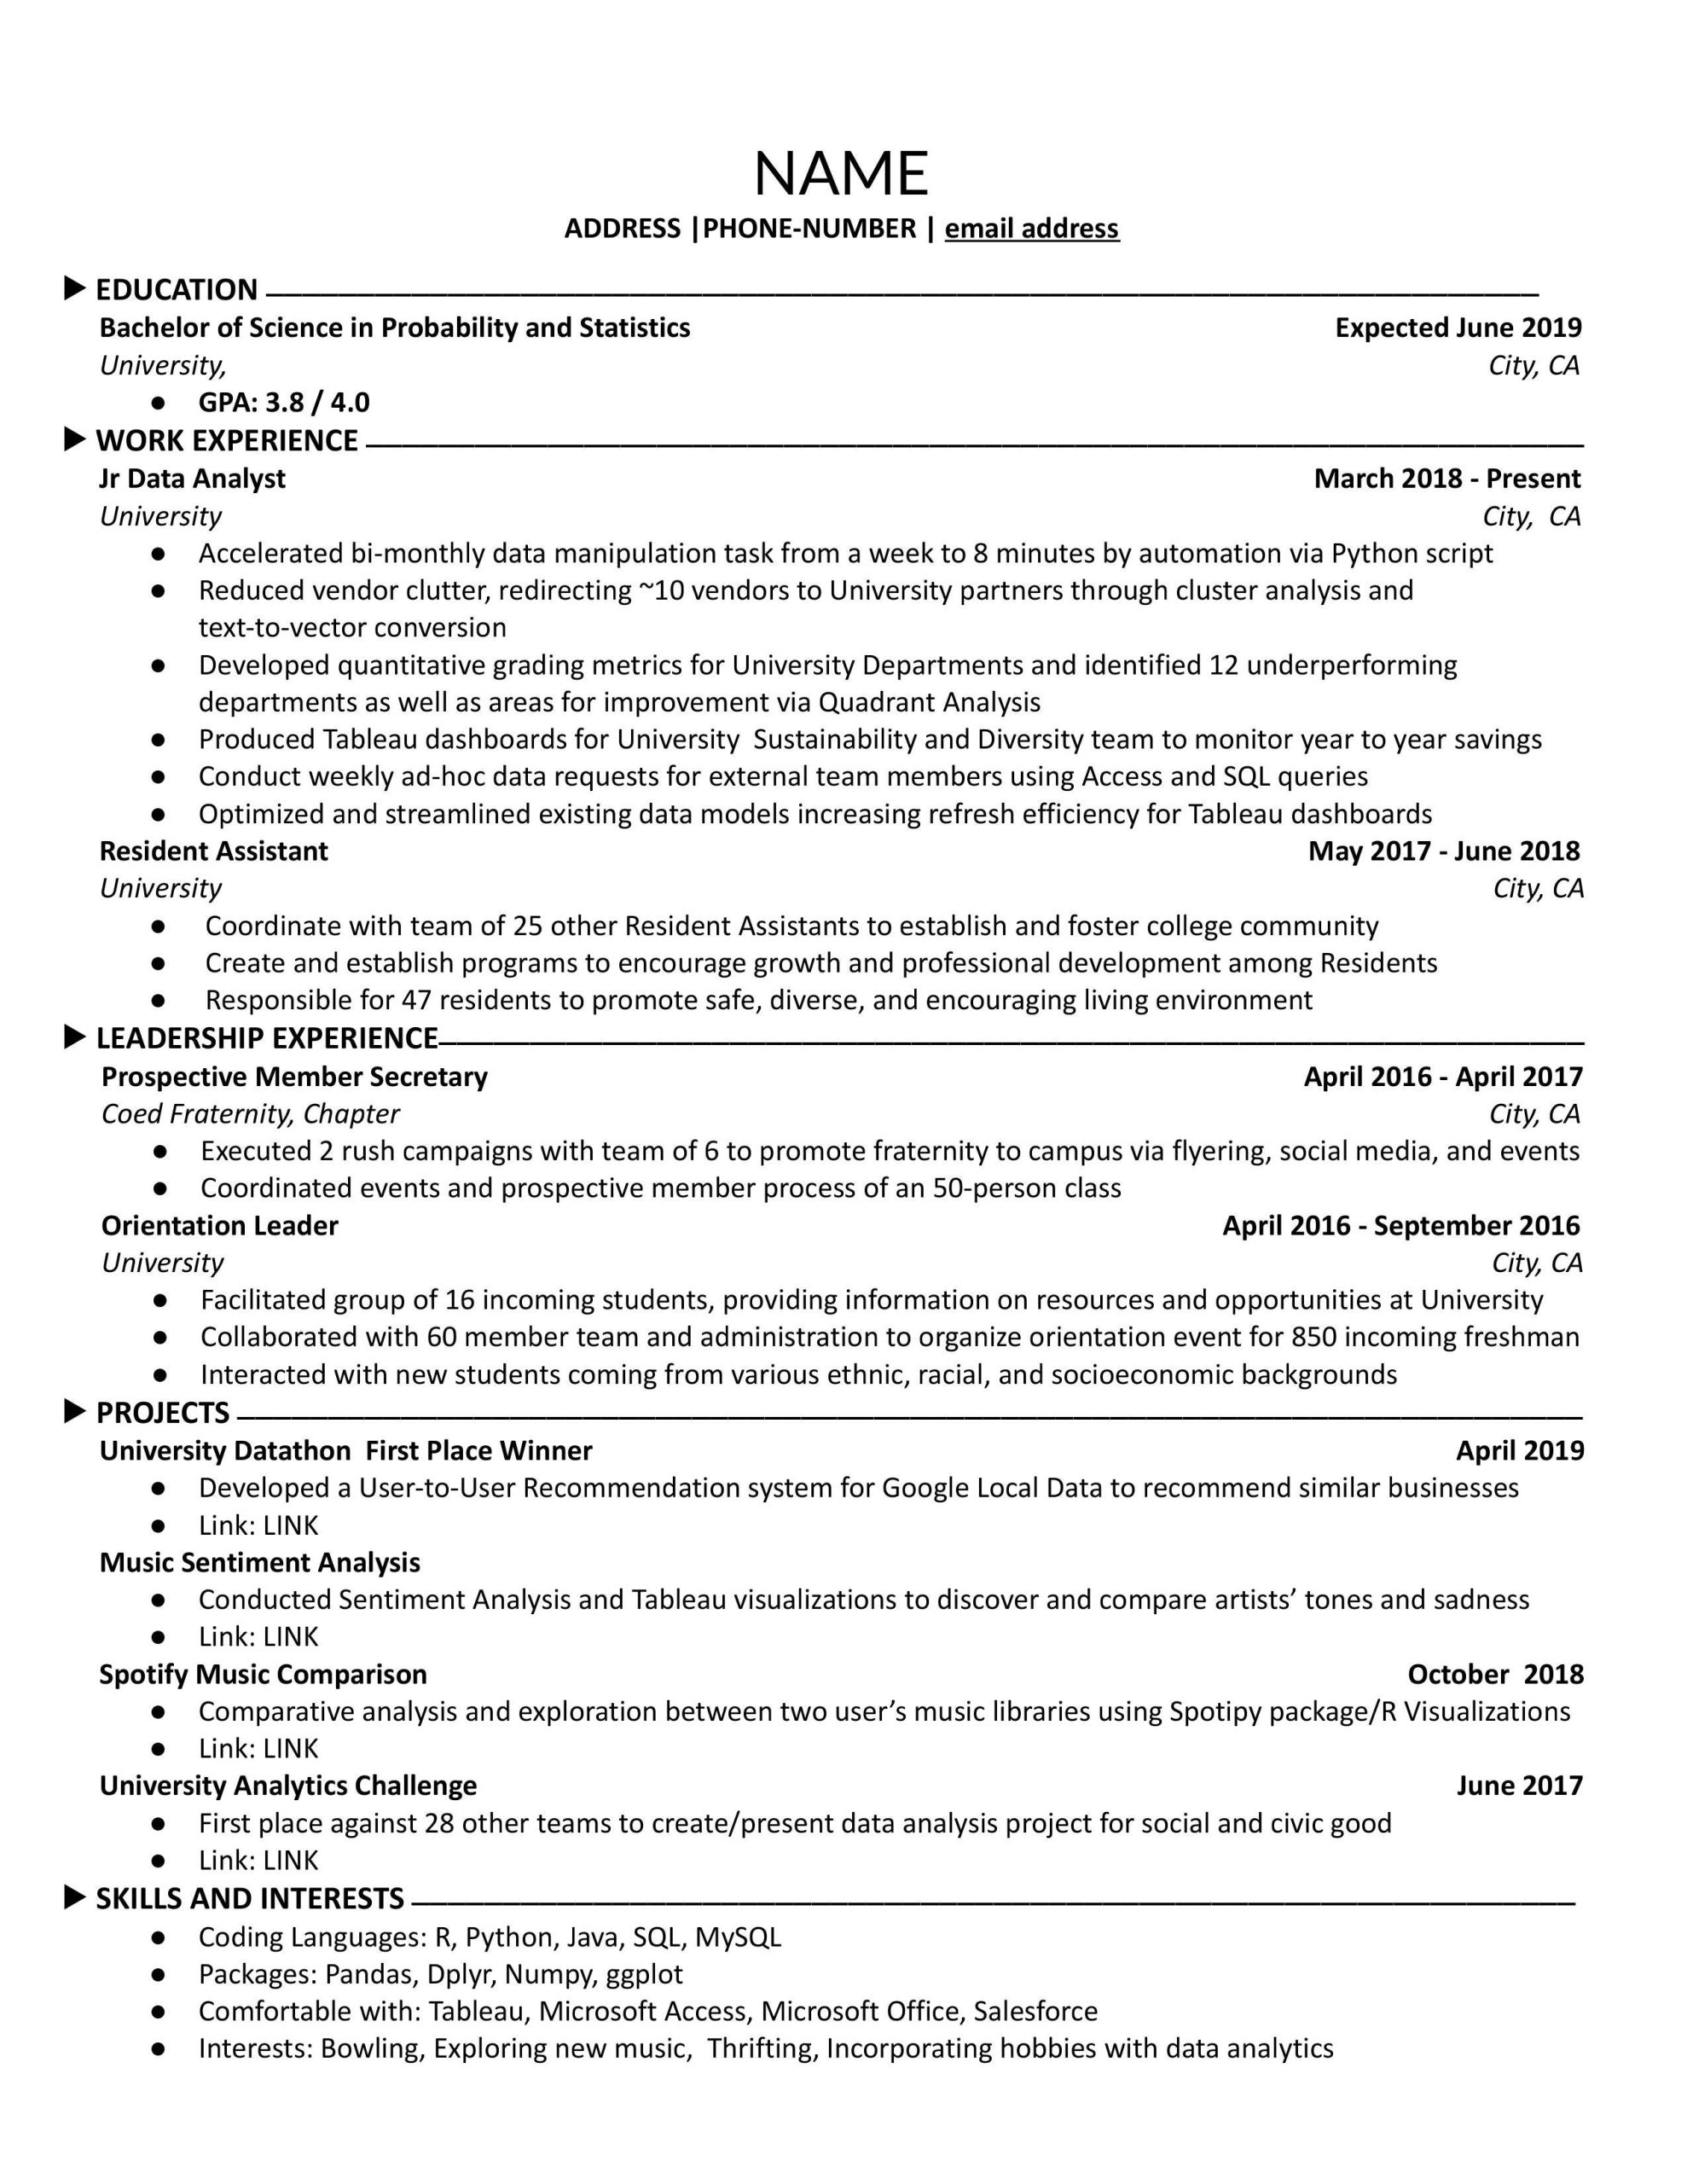 Sample Resume for Junior Data Analyst Data Analyst Resume : R/resumes